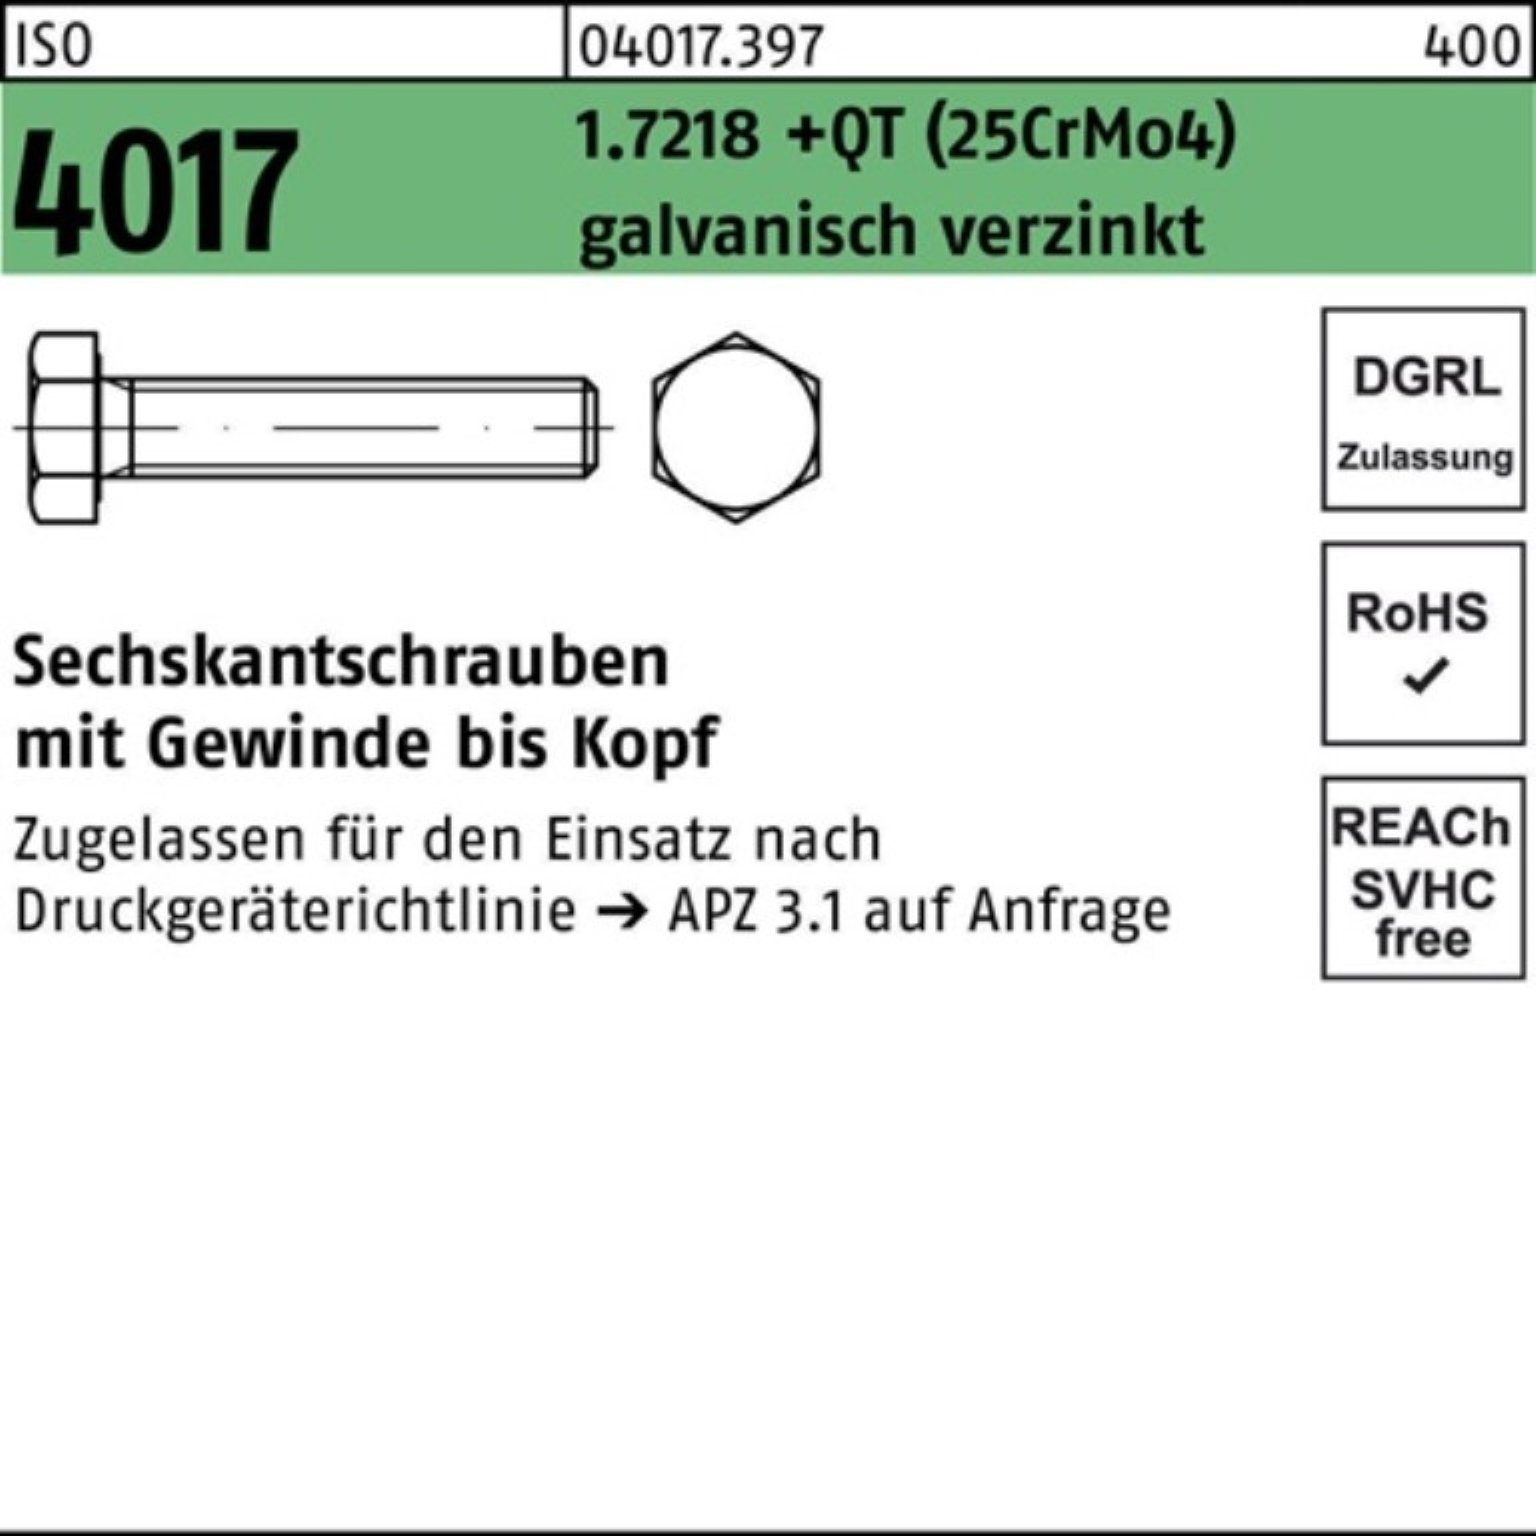 Bufab Sechskantschraube 100er Pack M12x35 (25CrMo4) 4017 g ISO Sechskantschraube VG +QT 1.7218